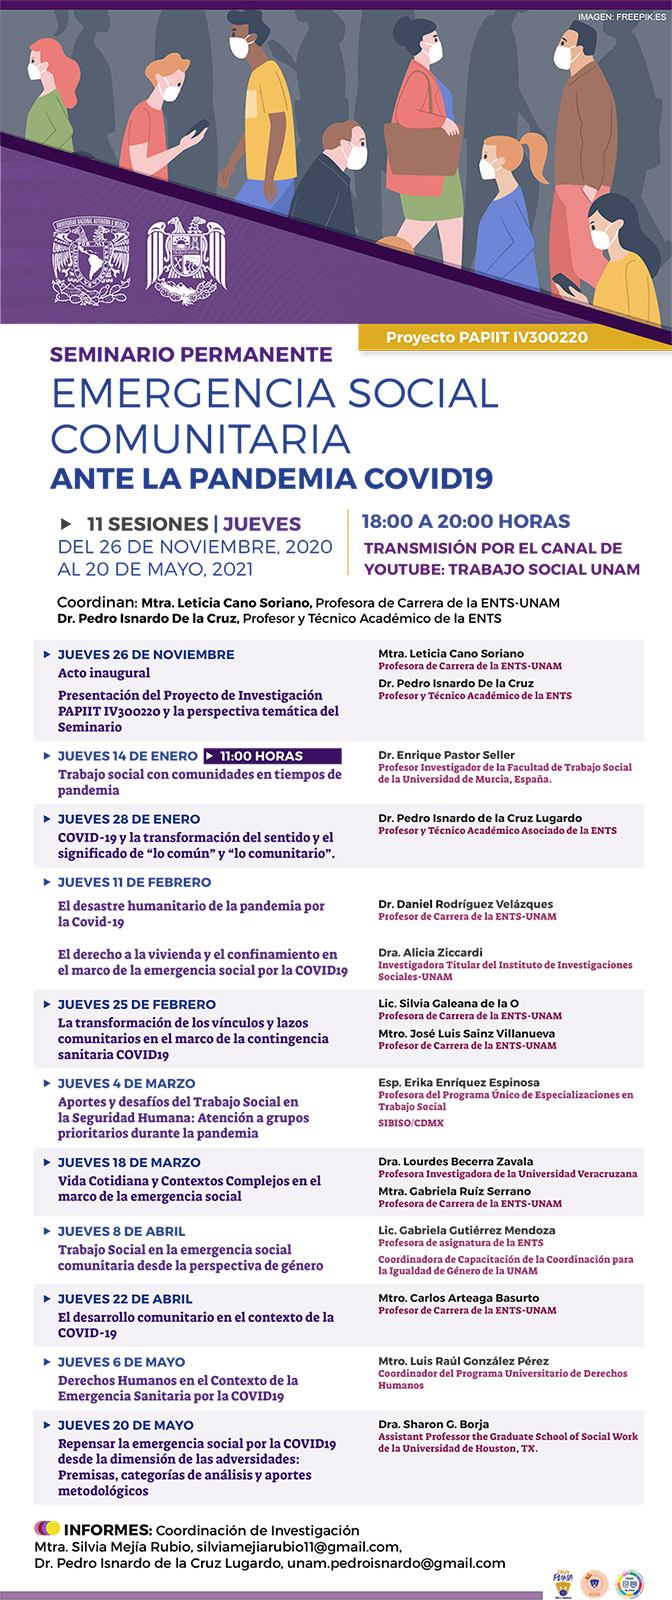 Seminario Permanente Emergencia social comunitaria ante la pandemia COVID19